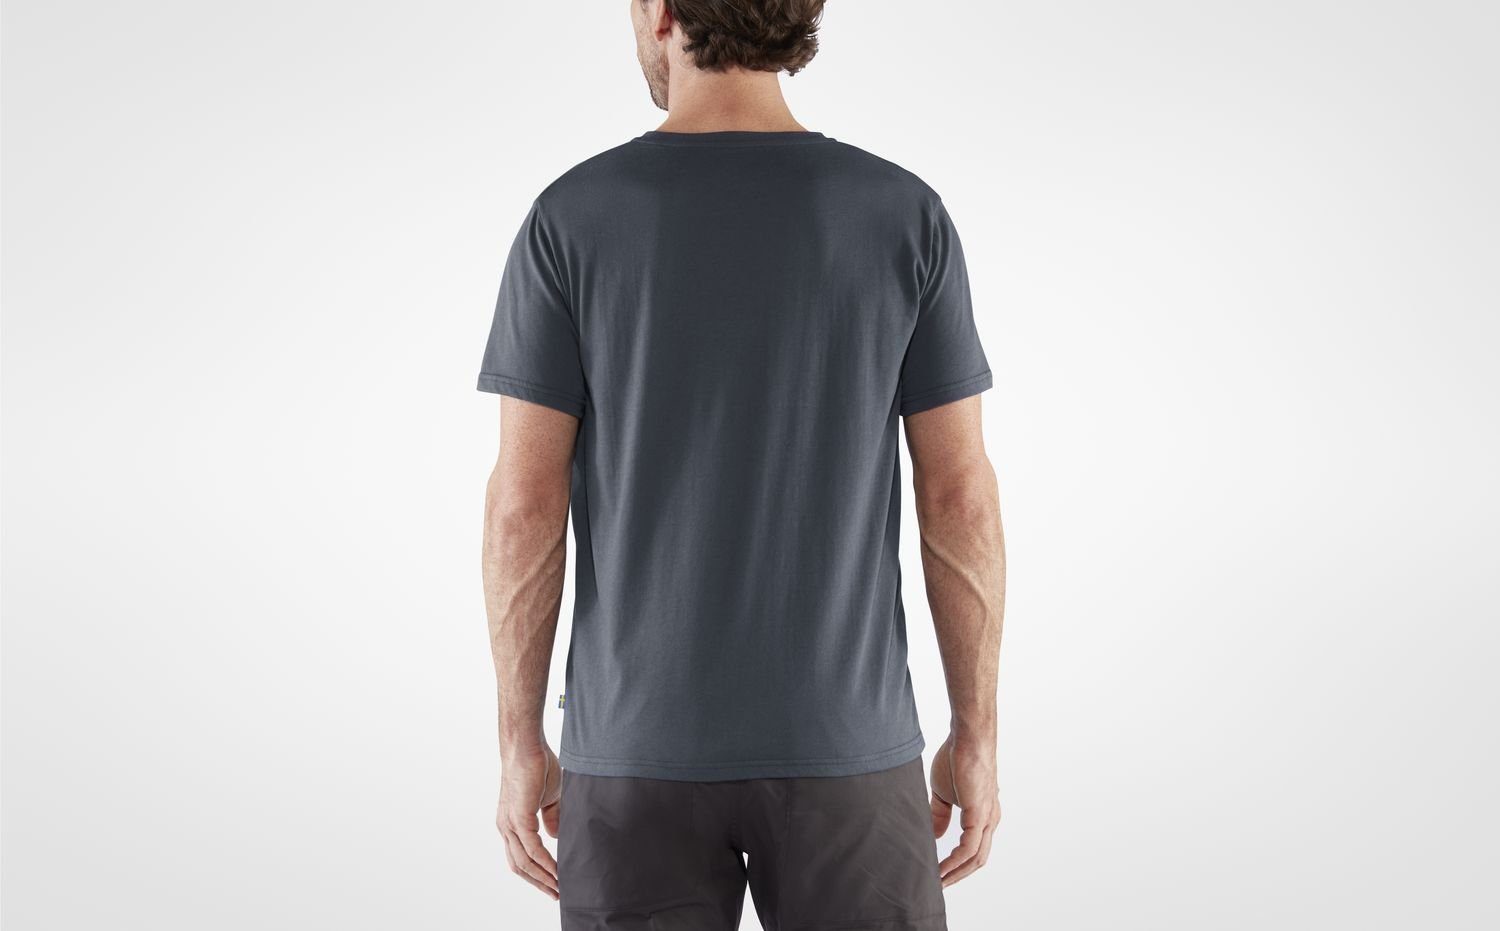 Sunrise Kurzarm-Shirt Fjällräven Fjällräven T-Shirt Herren Navy T-shirt M